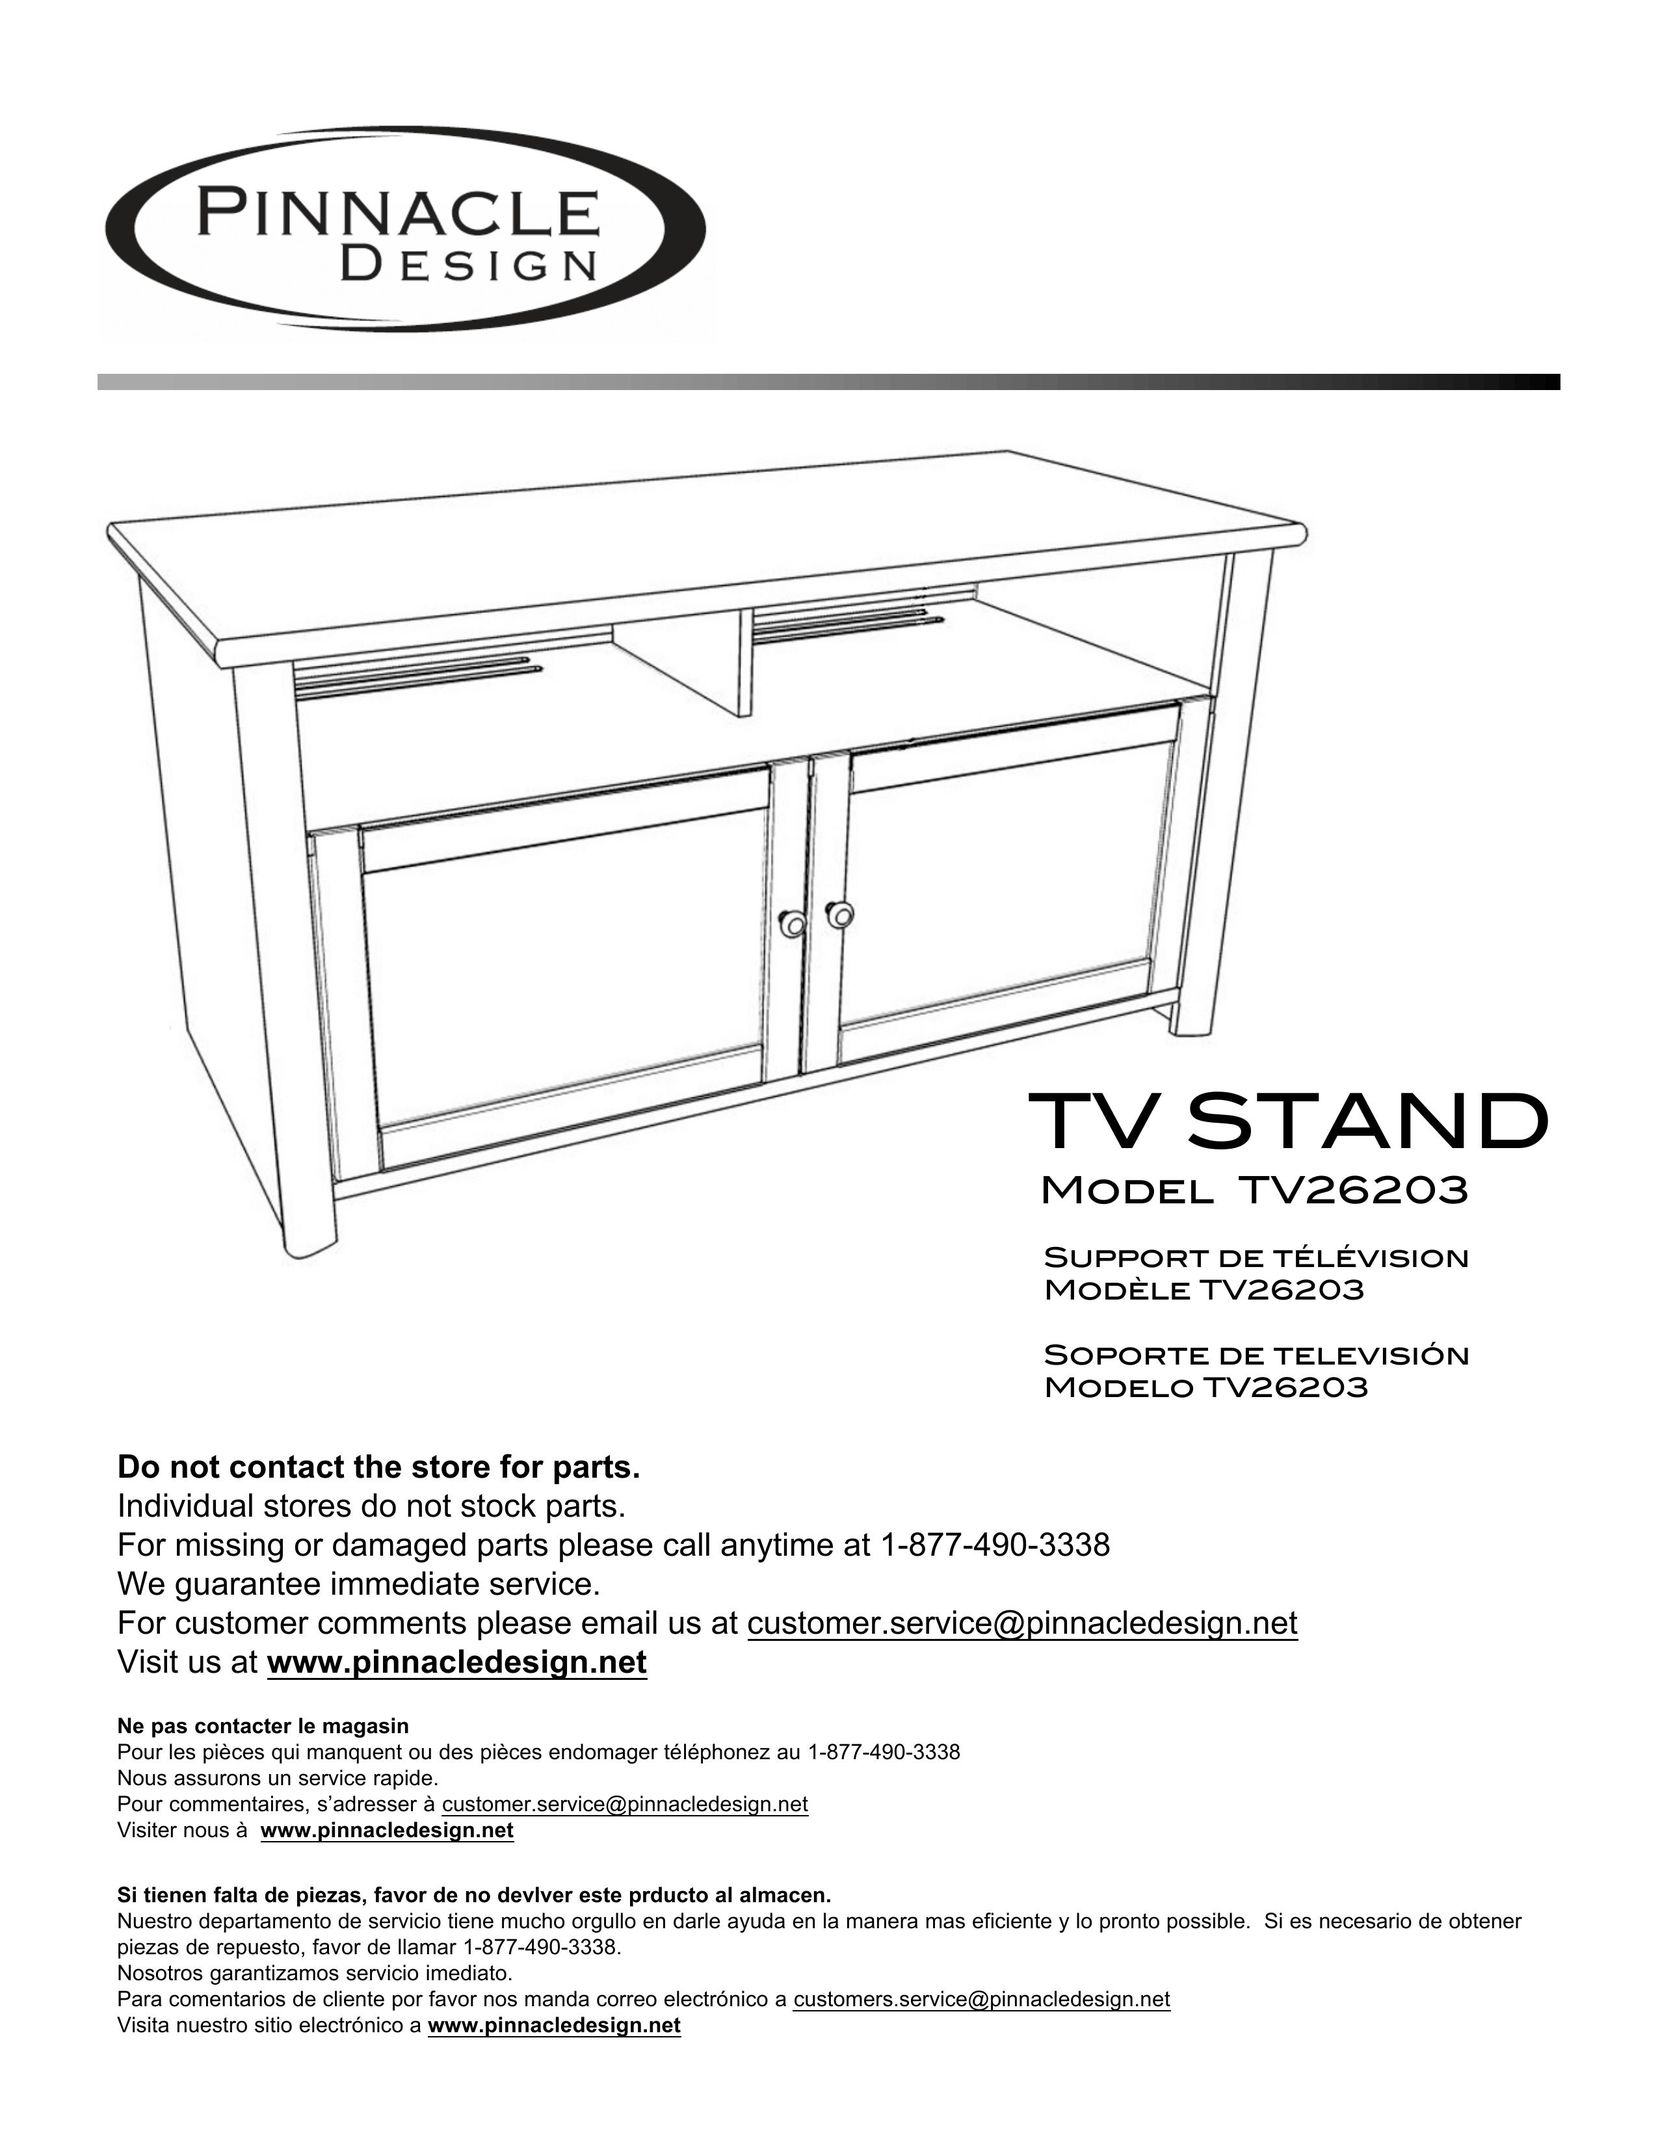 Pinnacle Design TV26203 TV Video Accessories User Manual